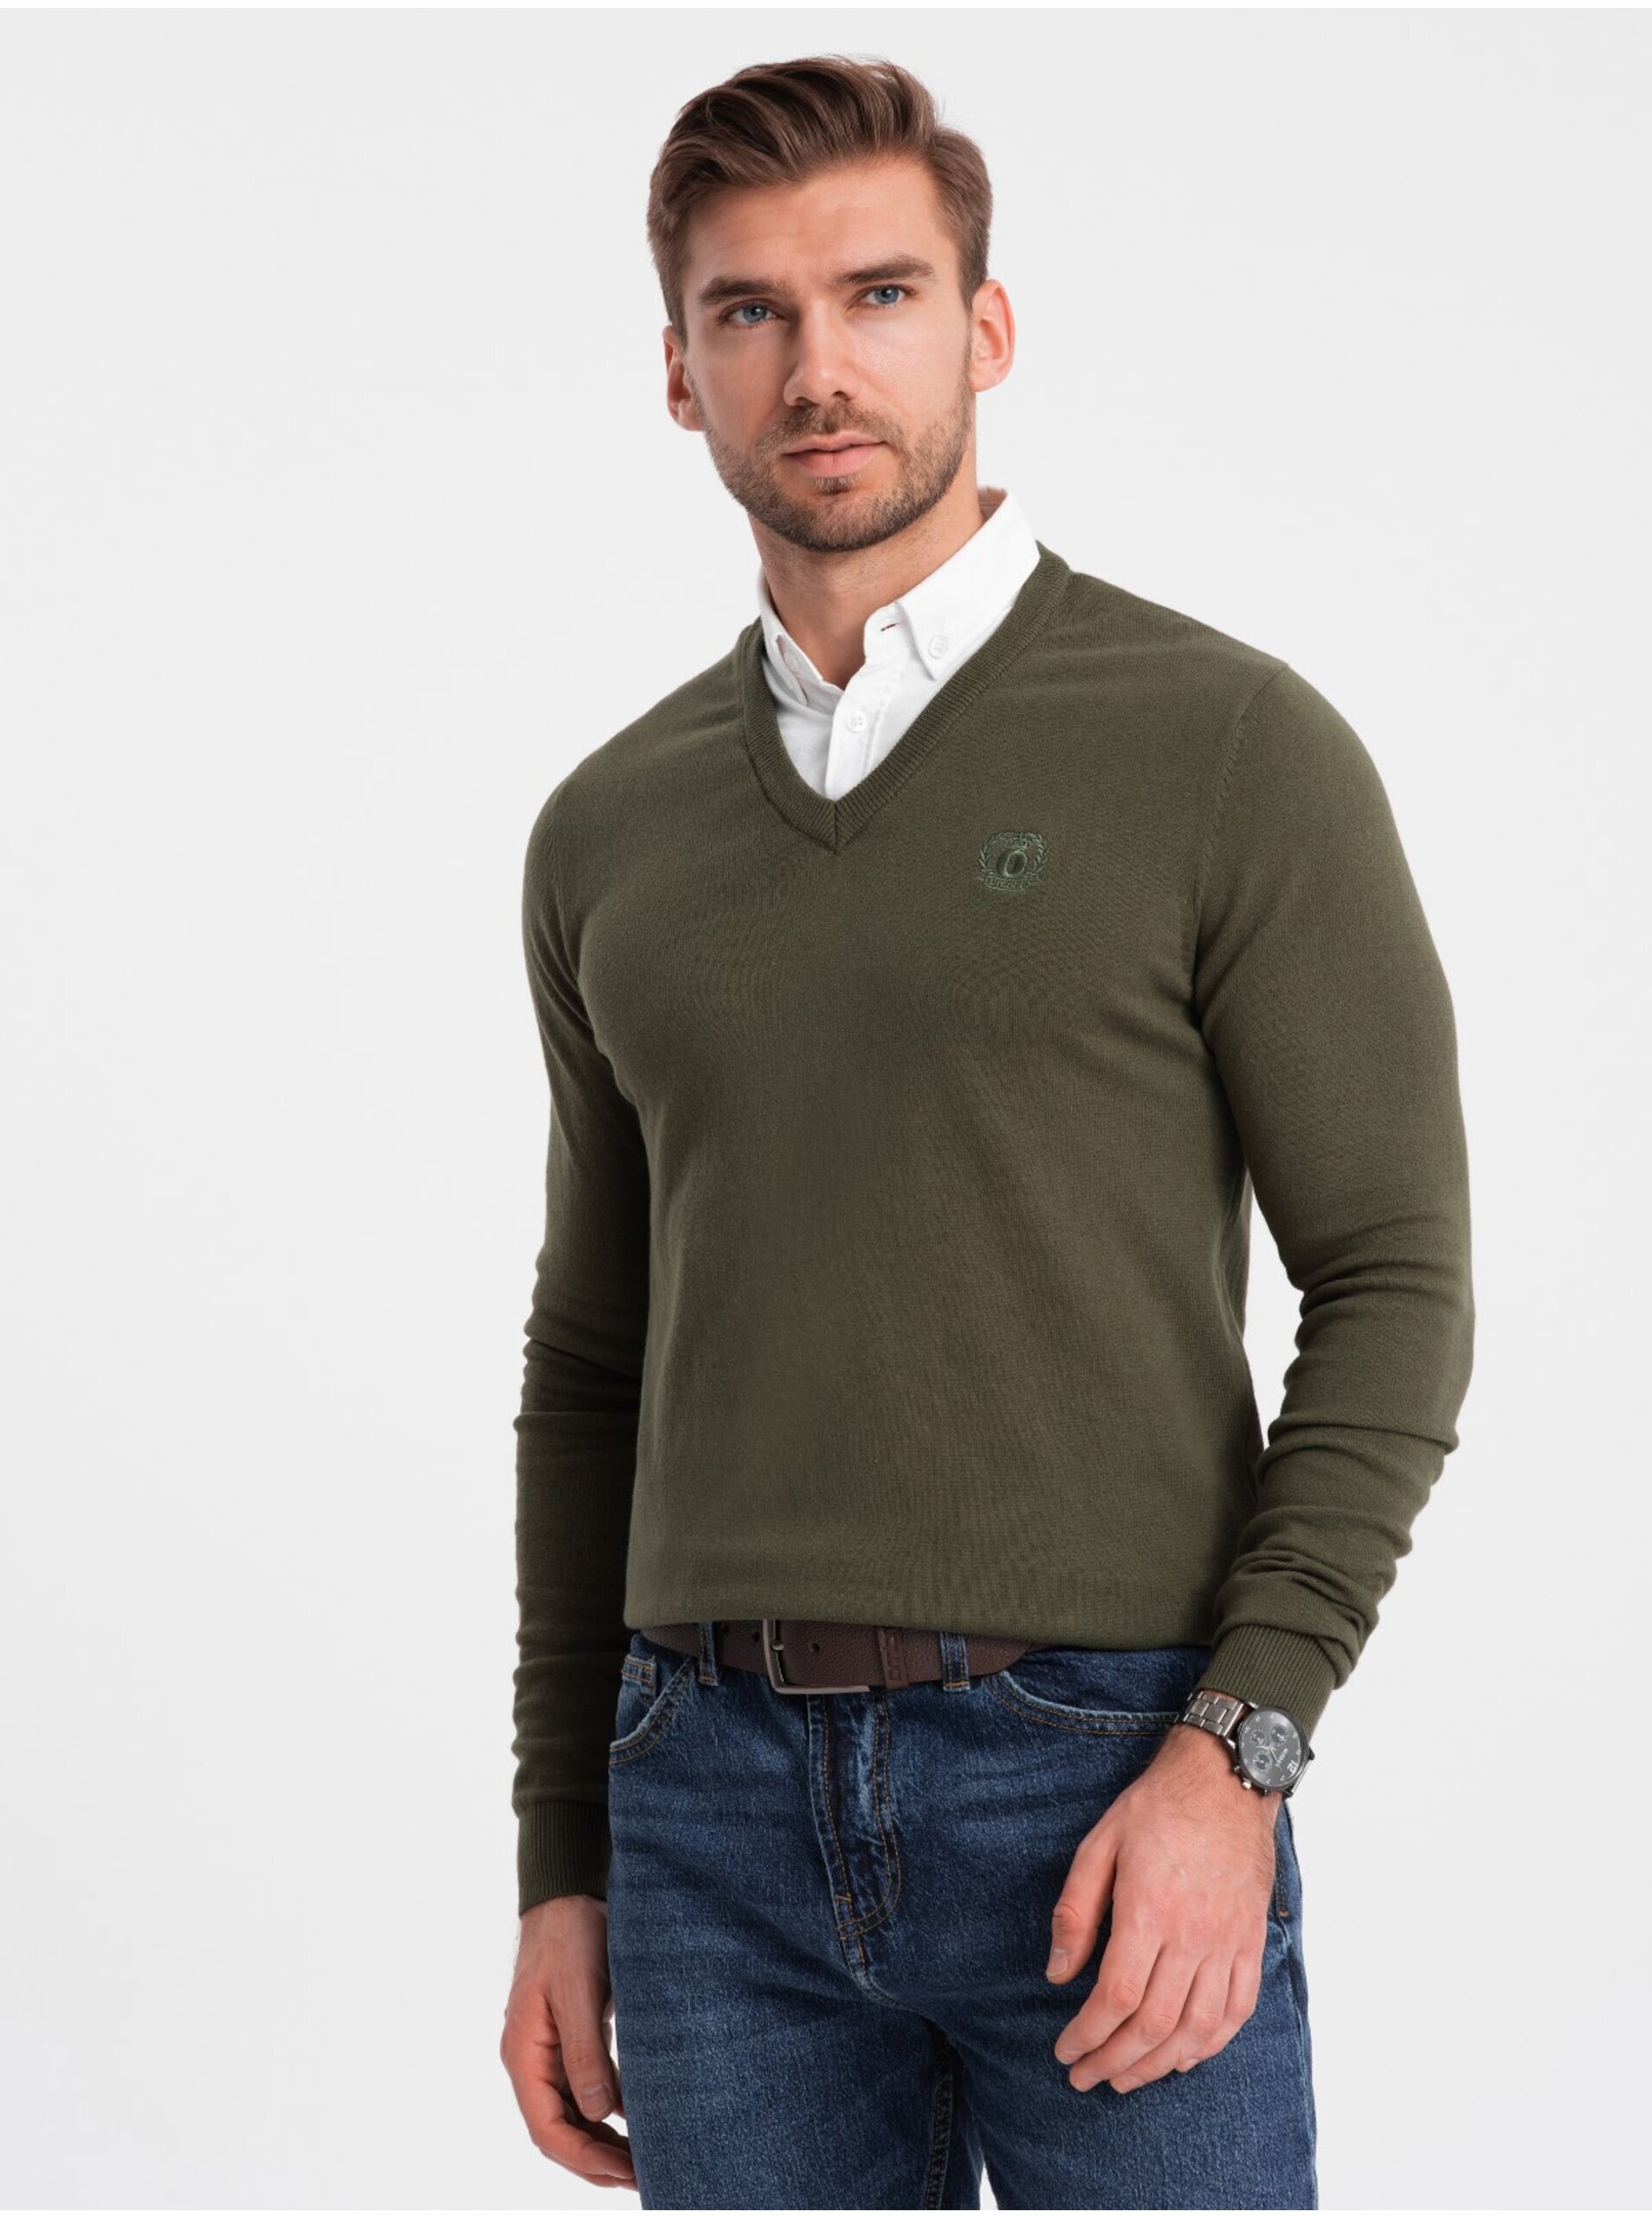 Lacno Zelený pánsky sveter s košeľovým golierom Ombre Clothing